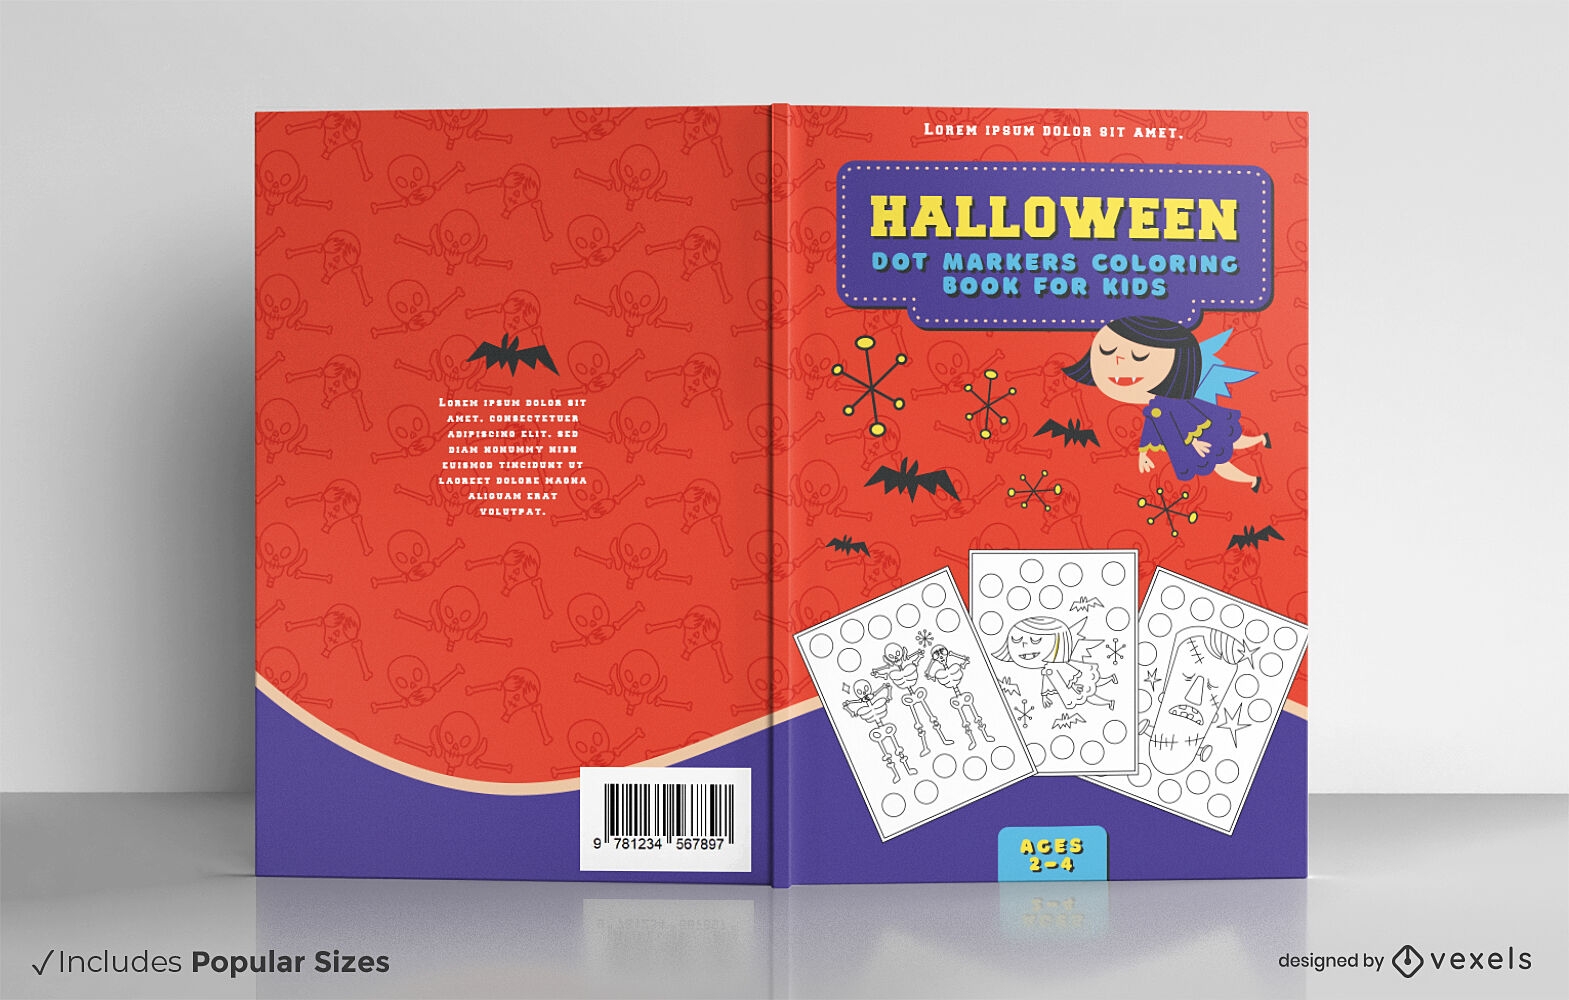 Child vampire halloween book cover design